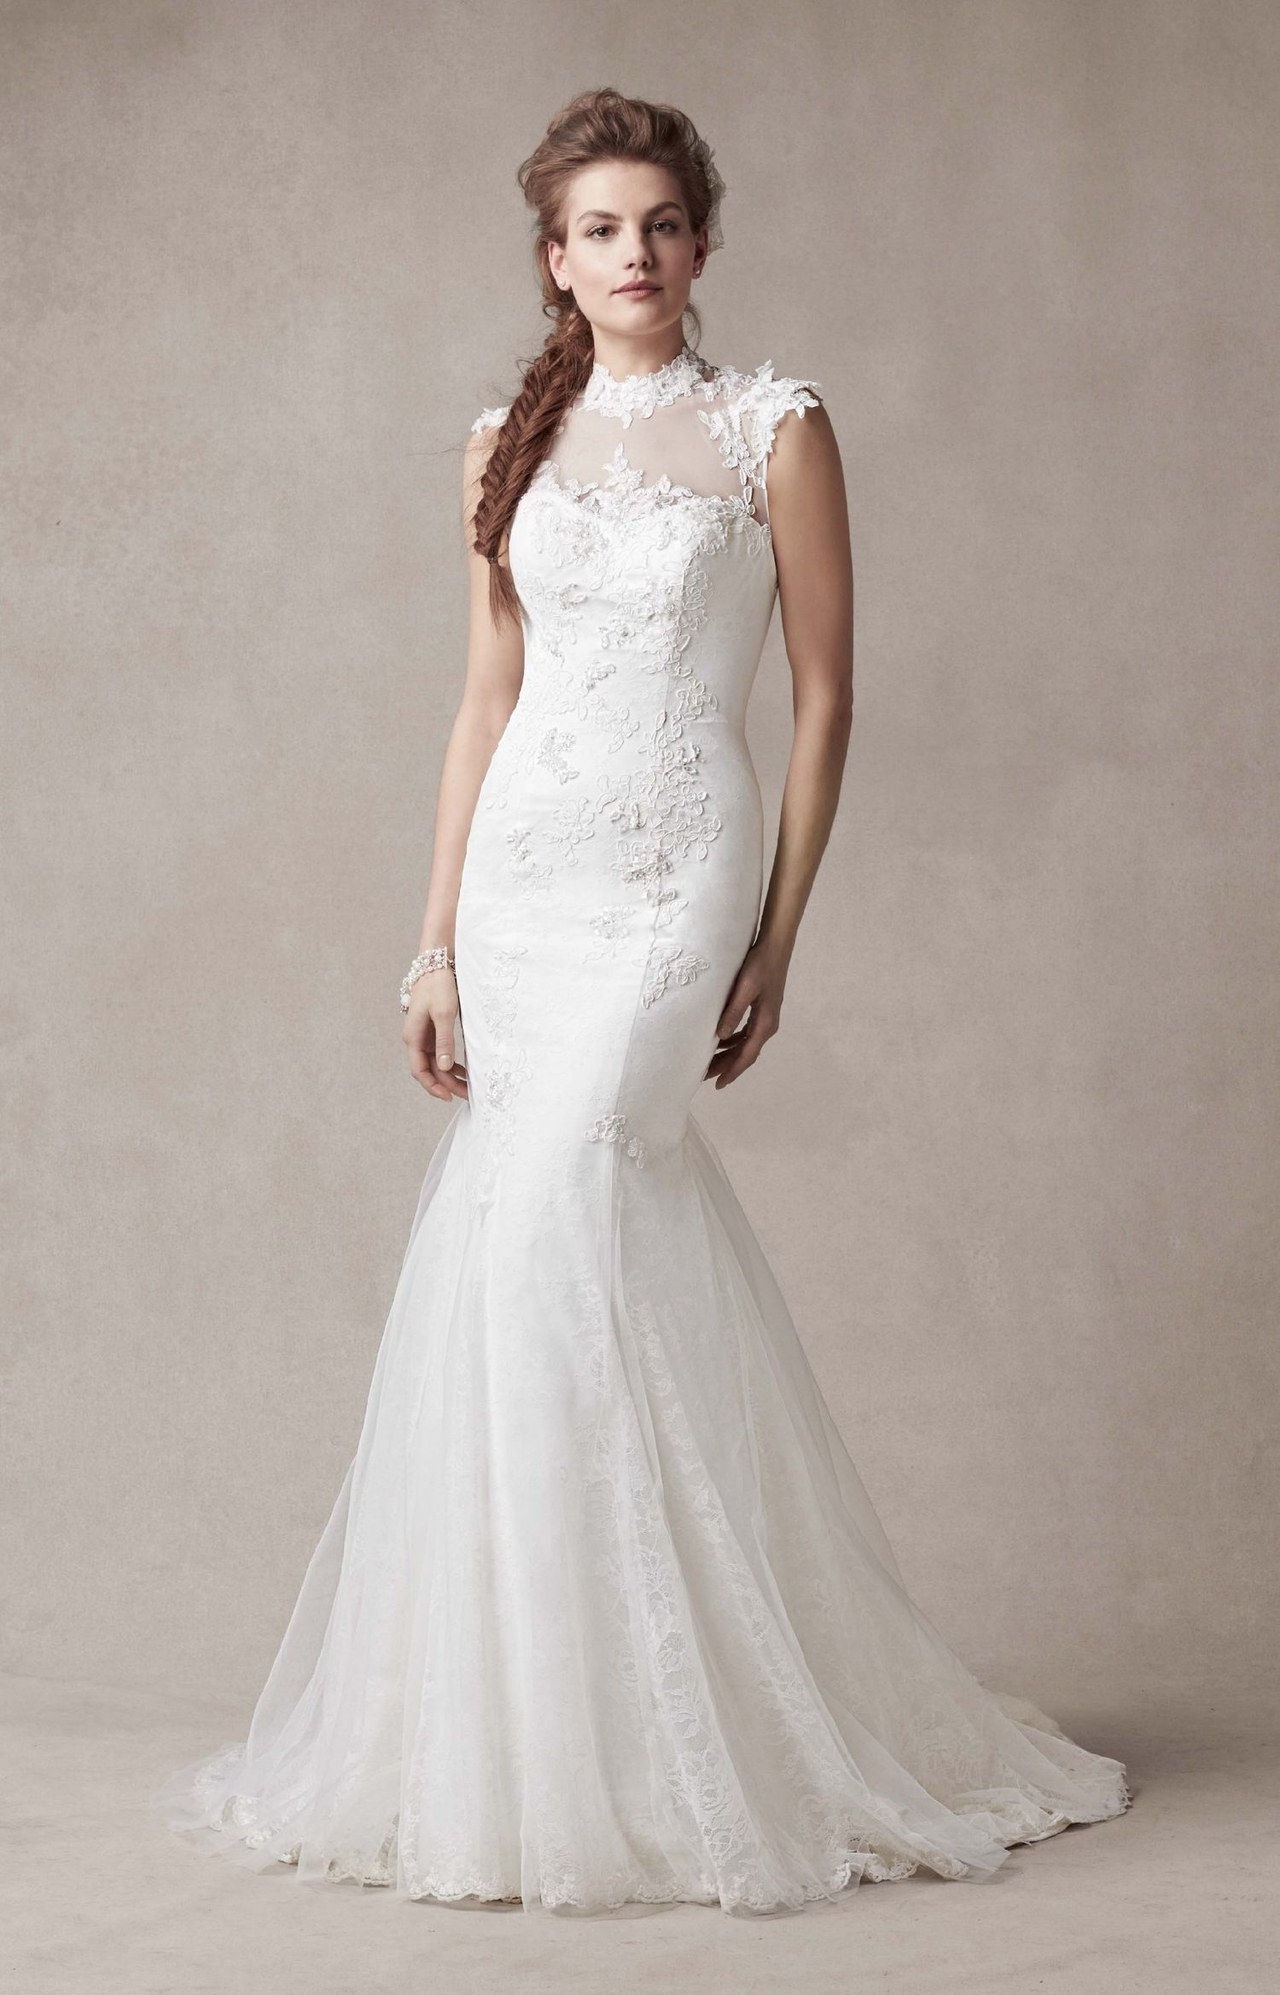 2 new melissa sweet for davids bridal wedding dresses 0612